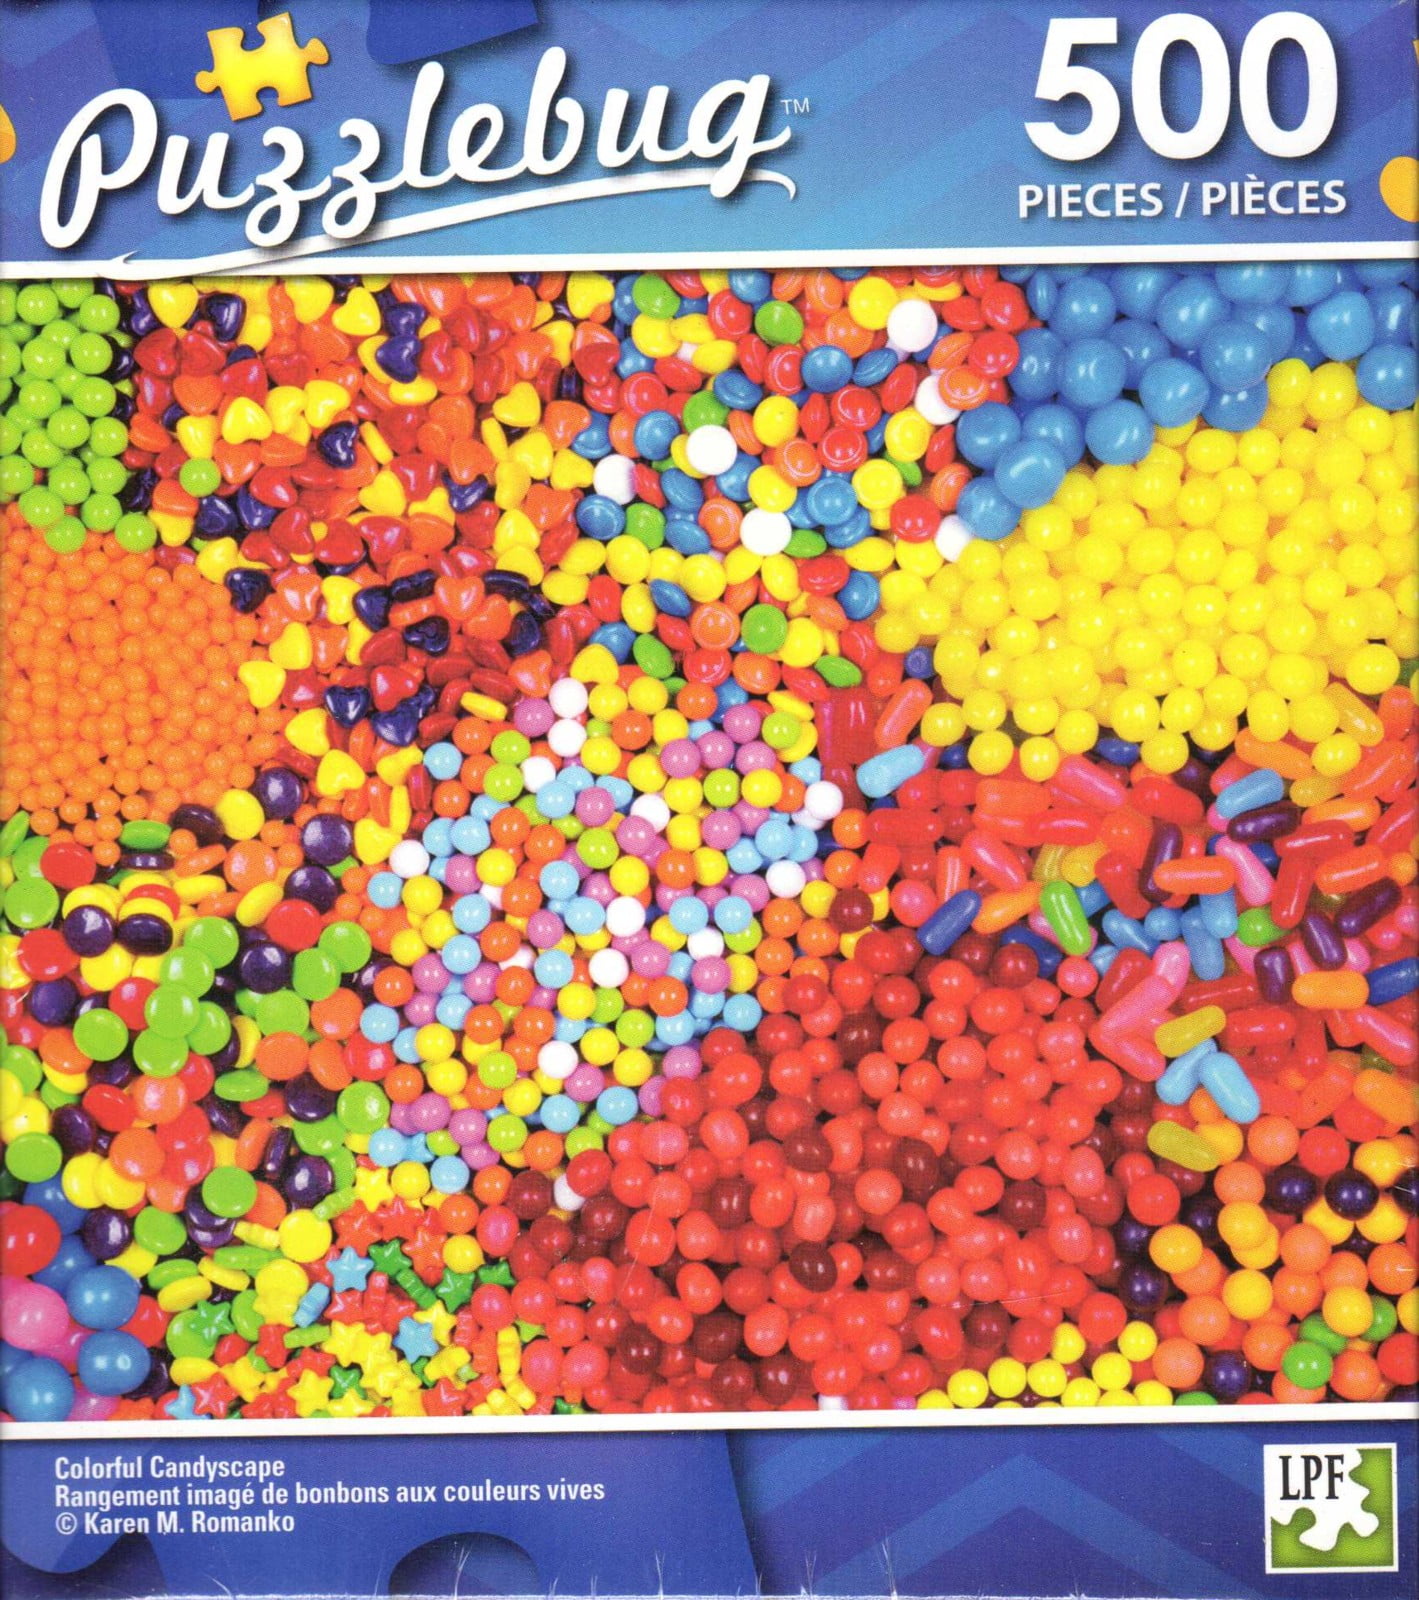 Puzzlebug 500 - Colorful Candyscape - Walmart.com